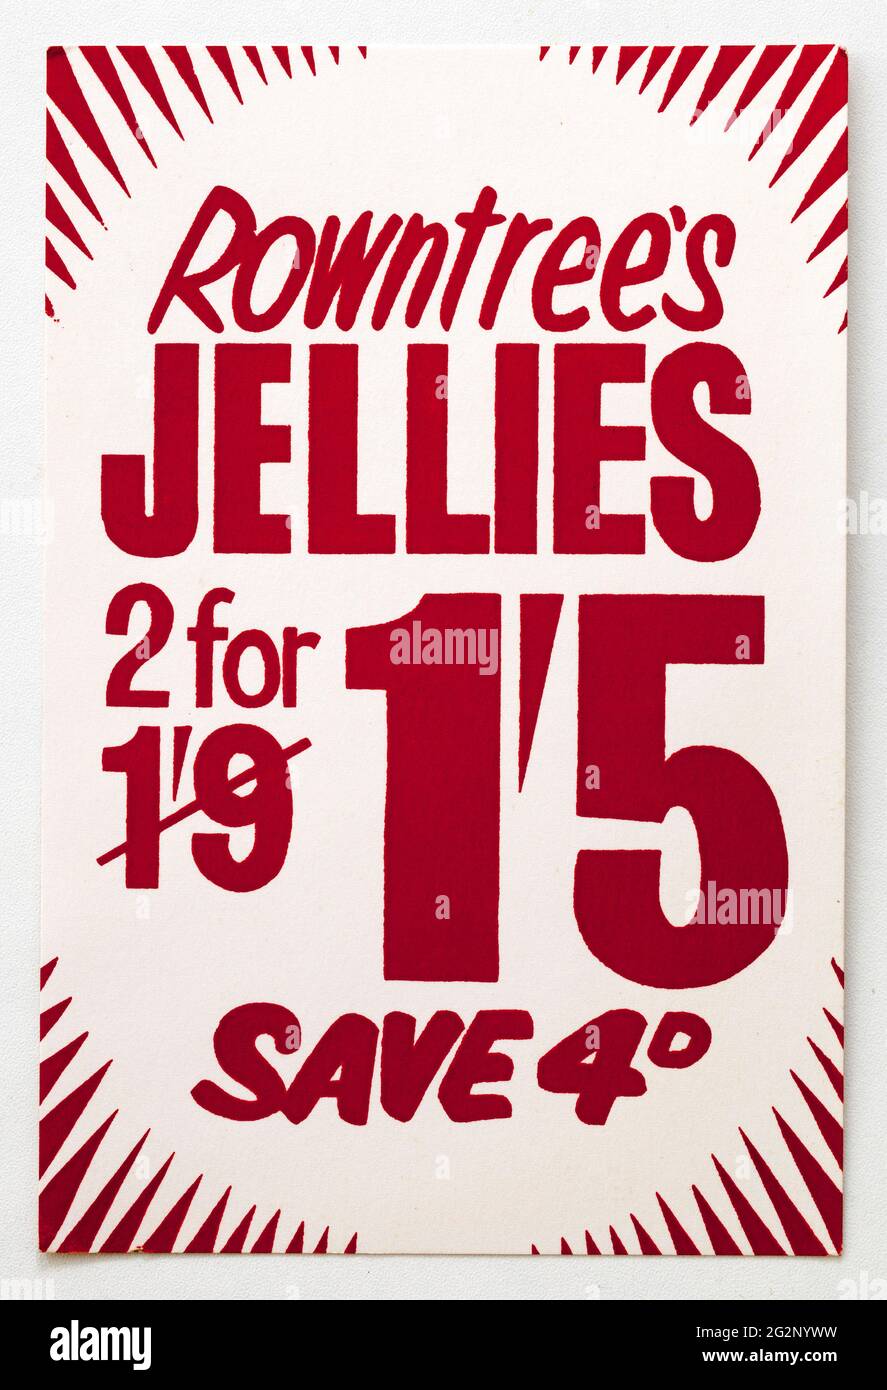 Vinatge 1960s Shop Advertising Price Display Card - Rowntrees Jellies Stock Photo